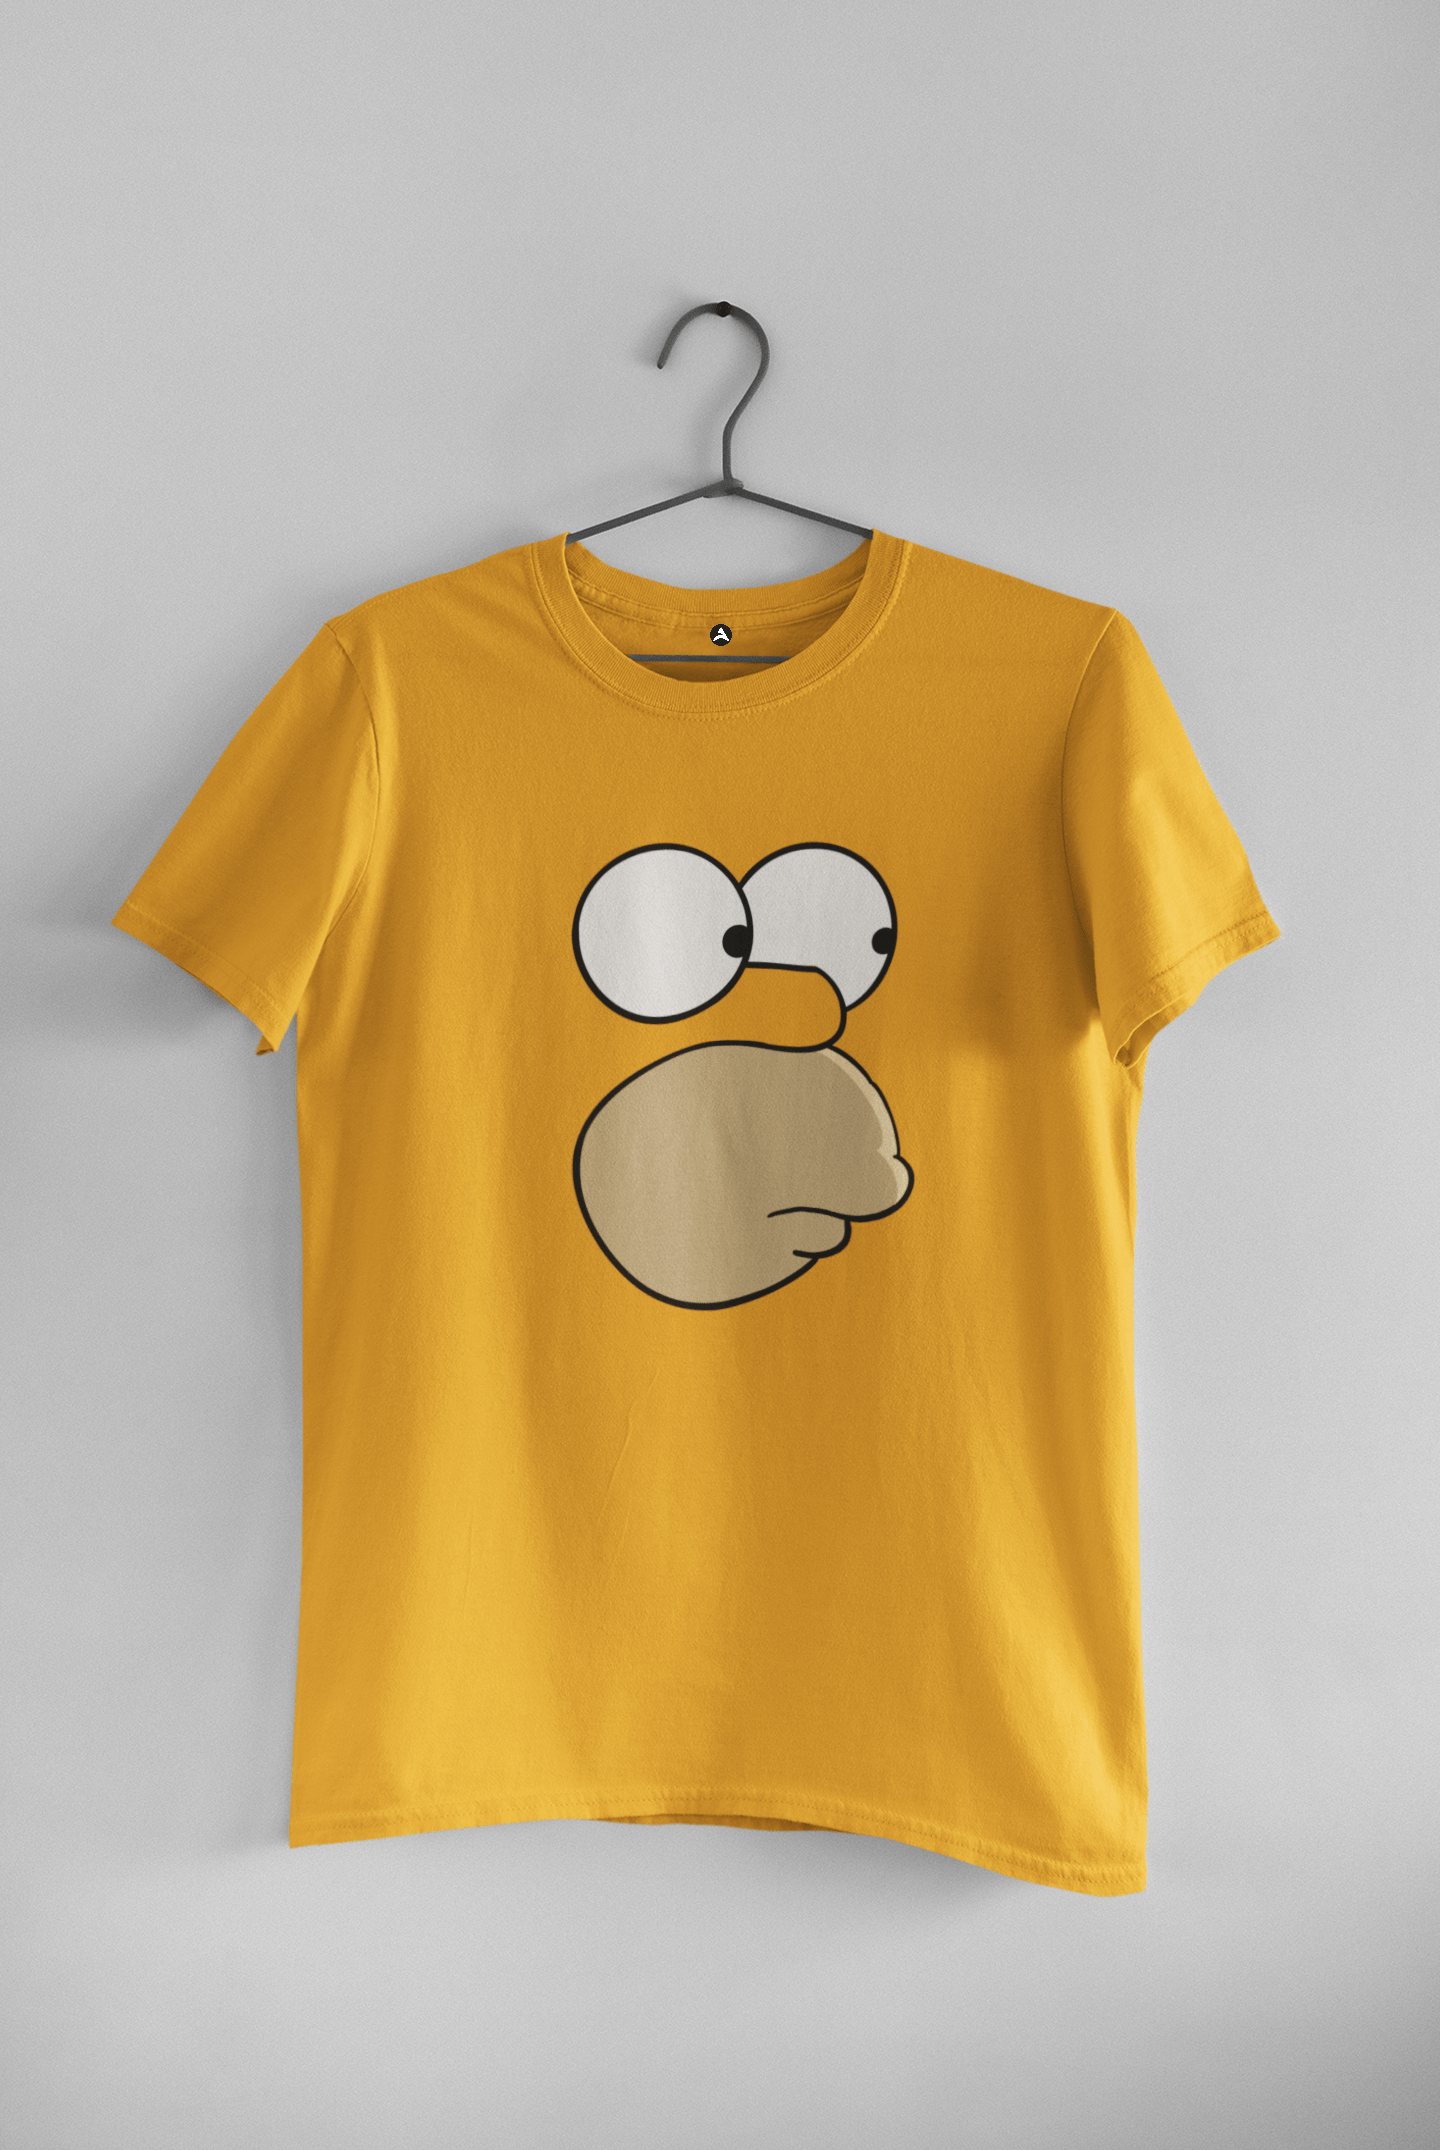 Bart Simpson Face - HALF-SLEEVE T-SHIRTS